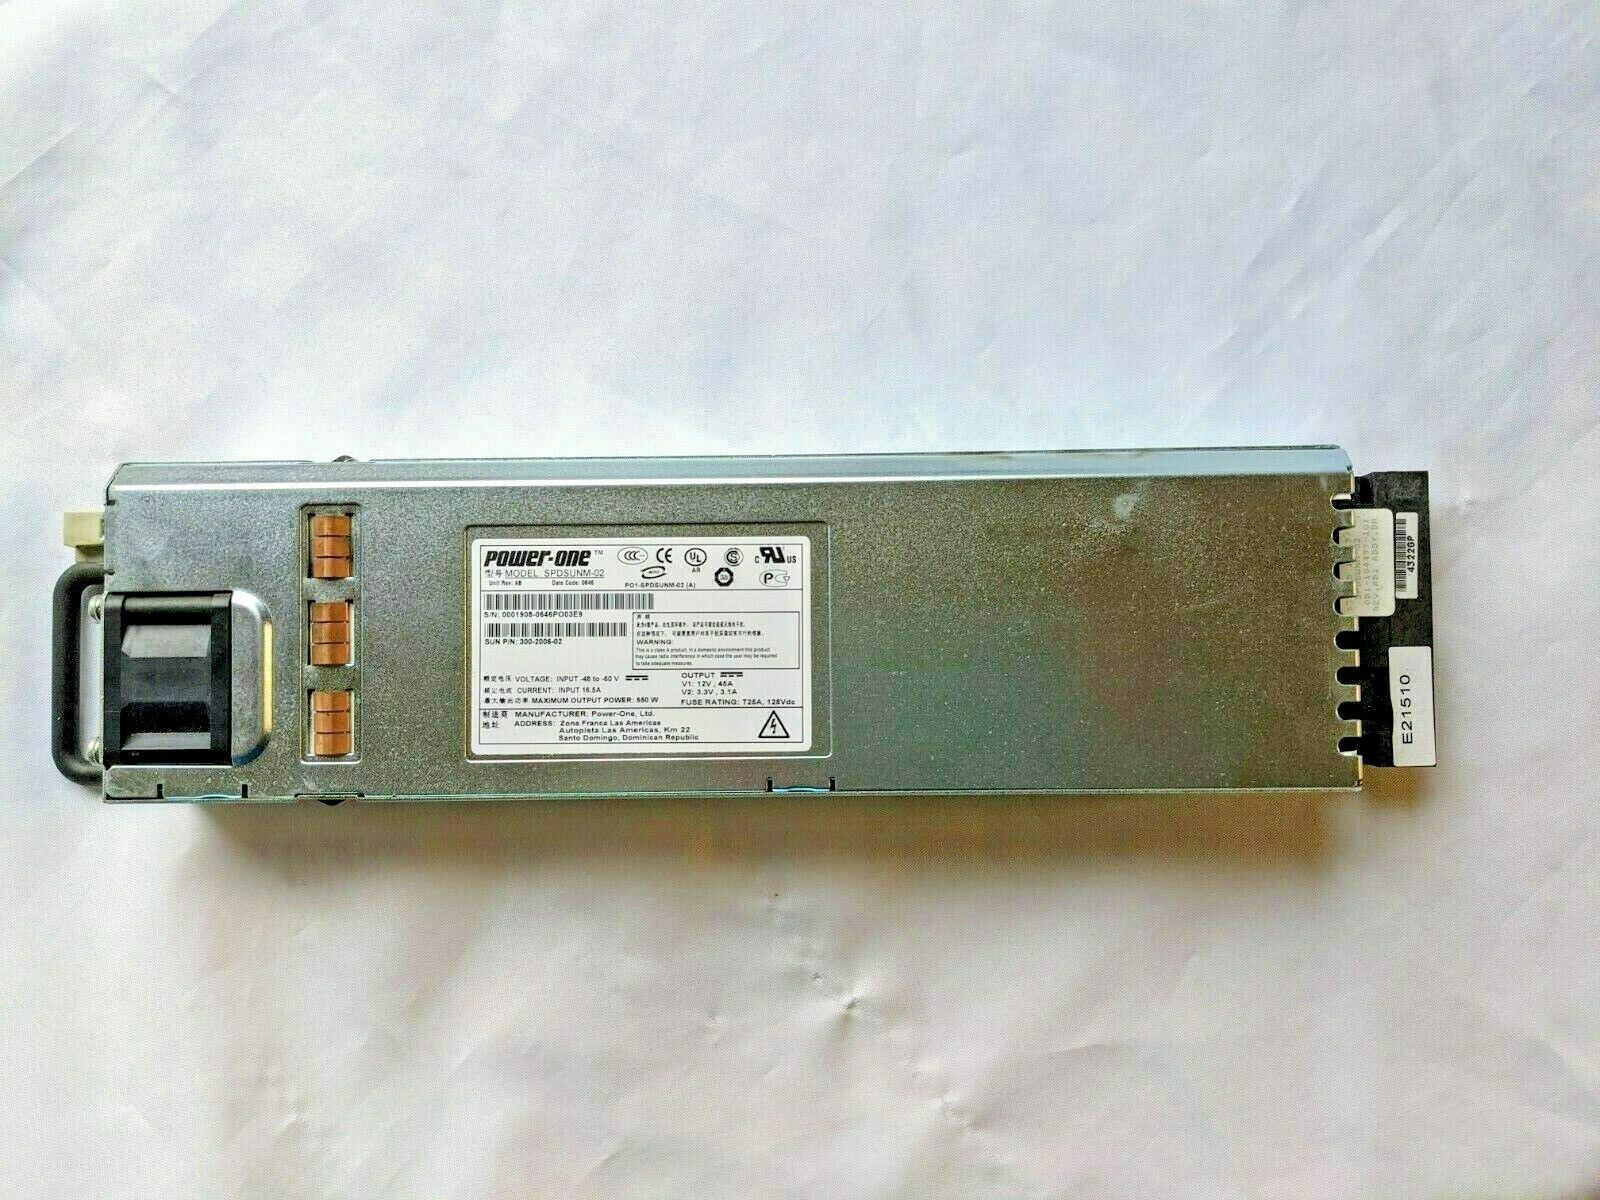 Sun X8051a-z – 550w Power Supply For Fire X4100